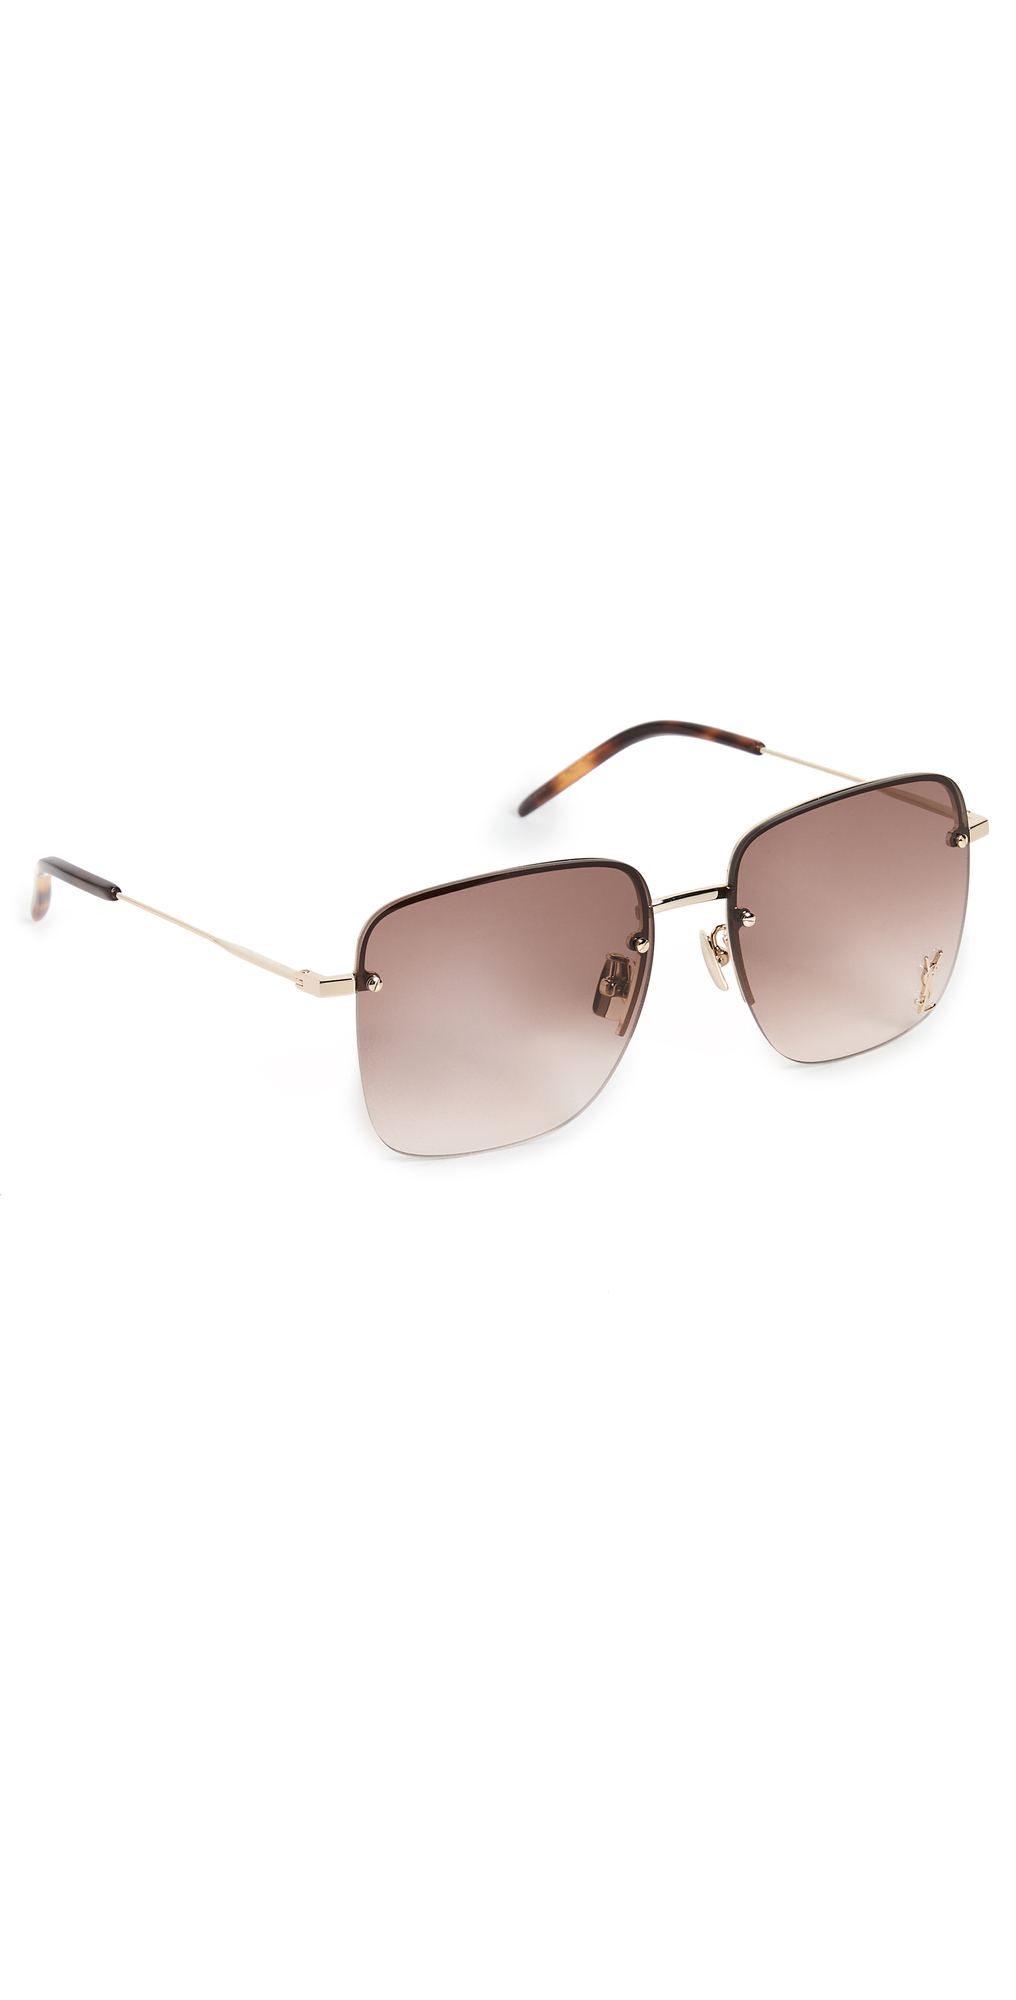 Saint Laurent SL 312 M Sunglasses in brown / gold